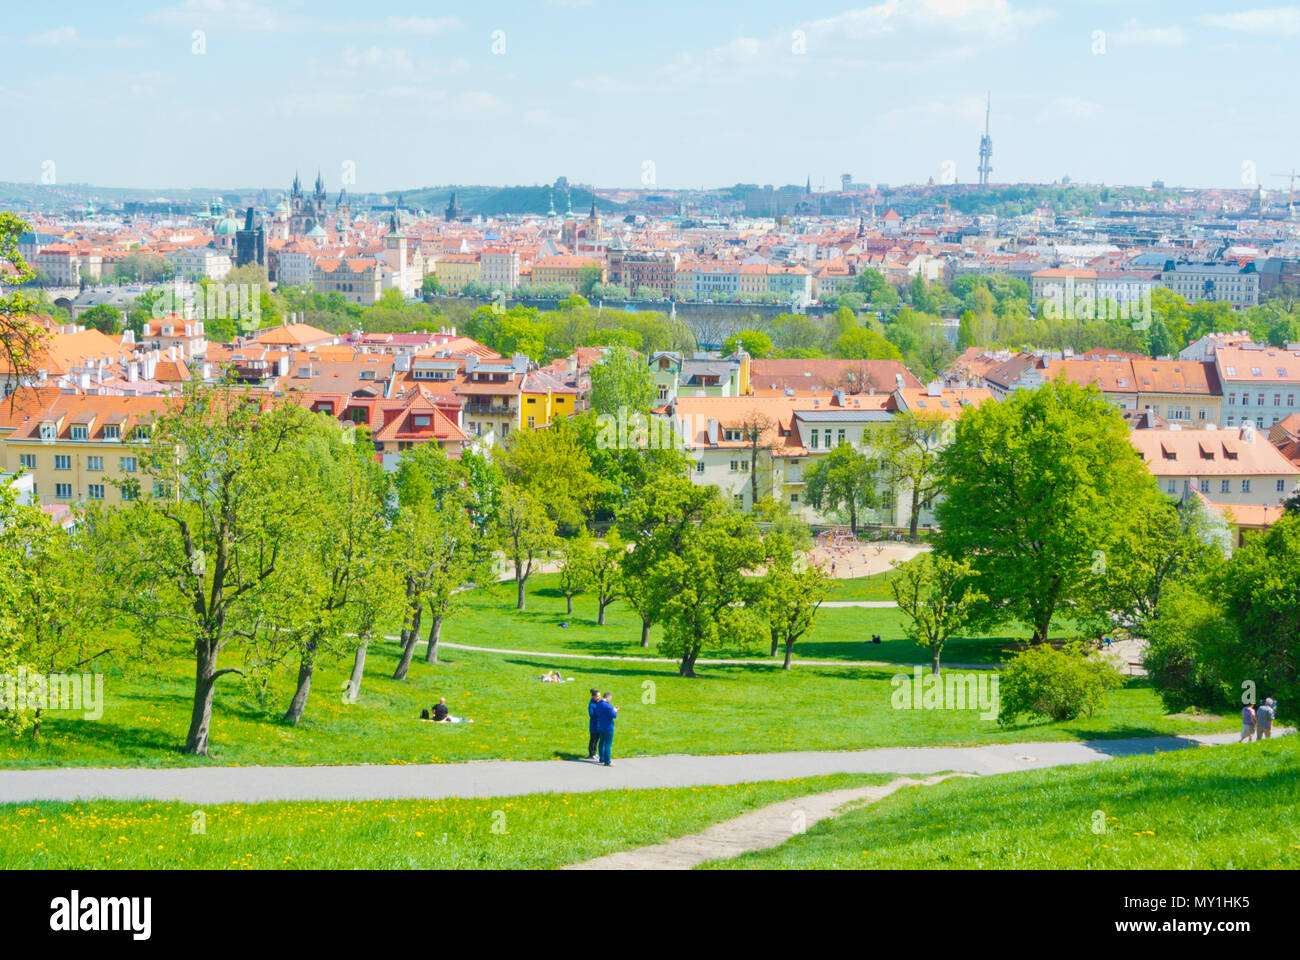 Petrinske sady, Petrin hill park, Prague, Czech Republic Stock Photo